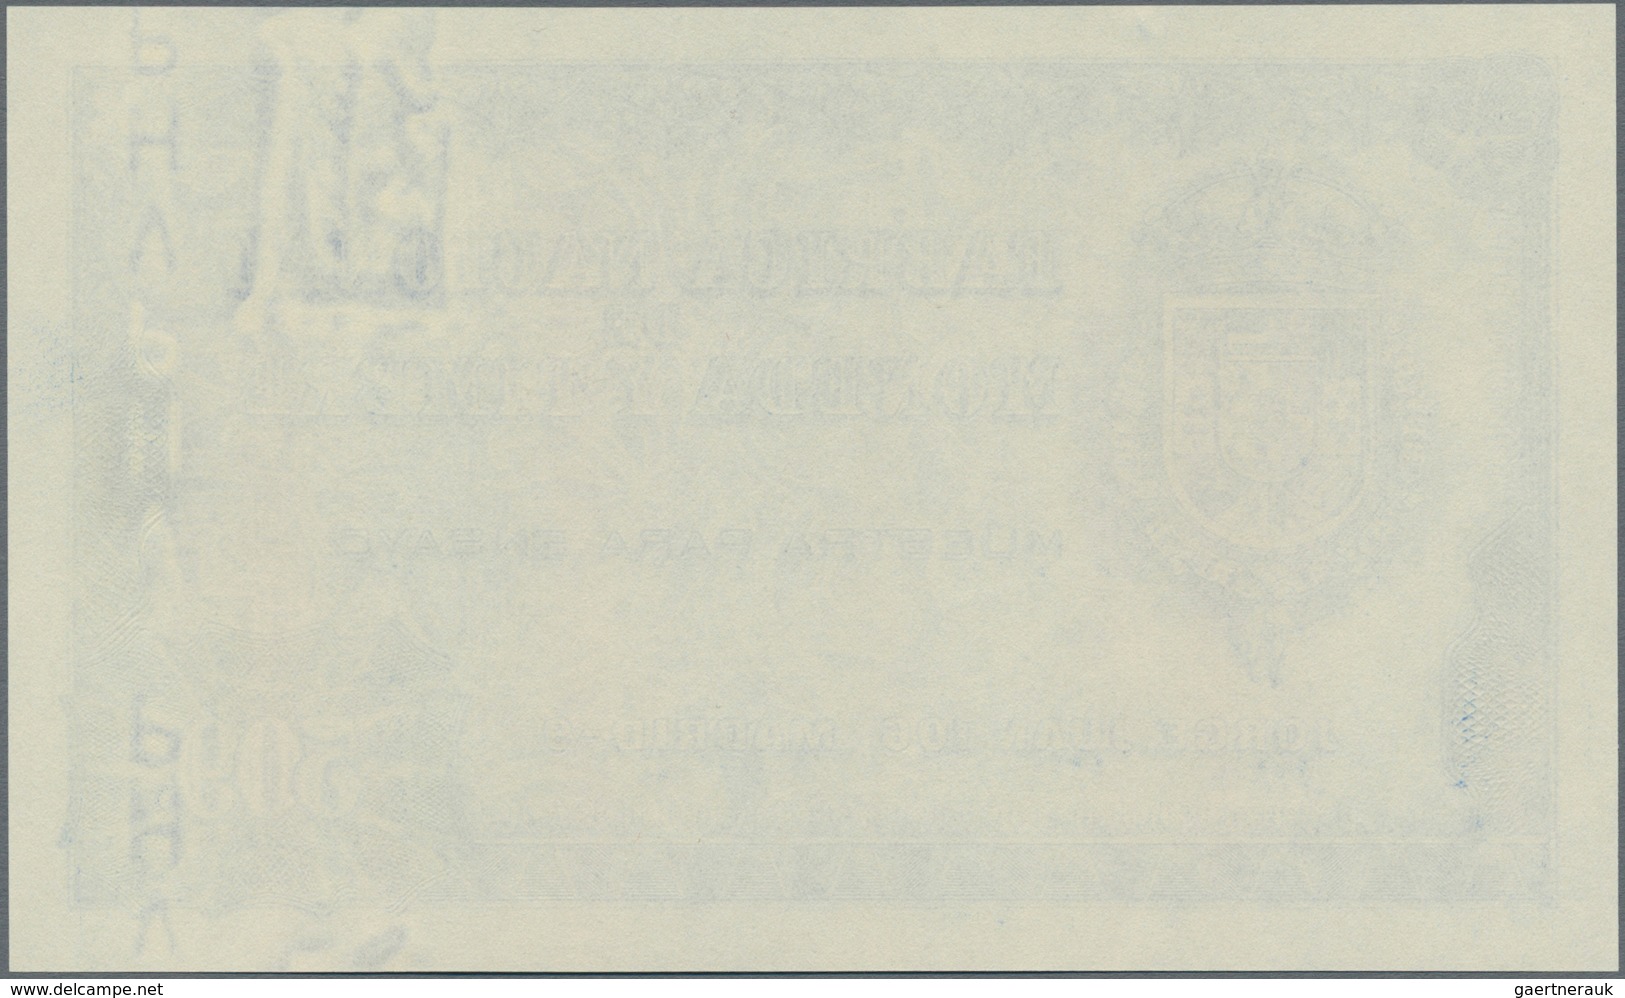 Testbanknoten: Fabricia Nacional De Moneda Y Timbre Uniface Intaglio Printed Test Note "509" In Blue - Fiktive & Specimen